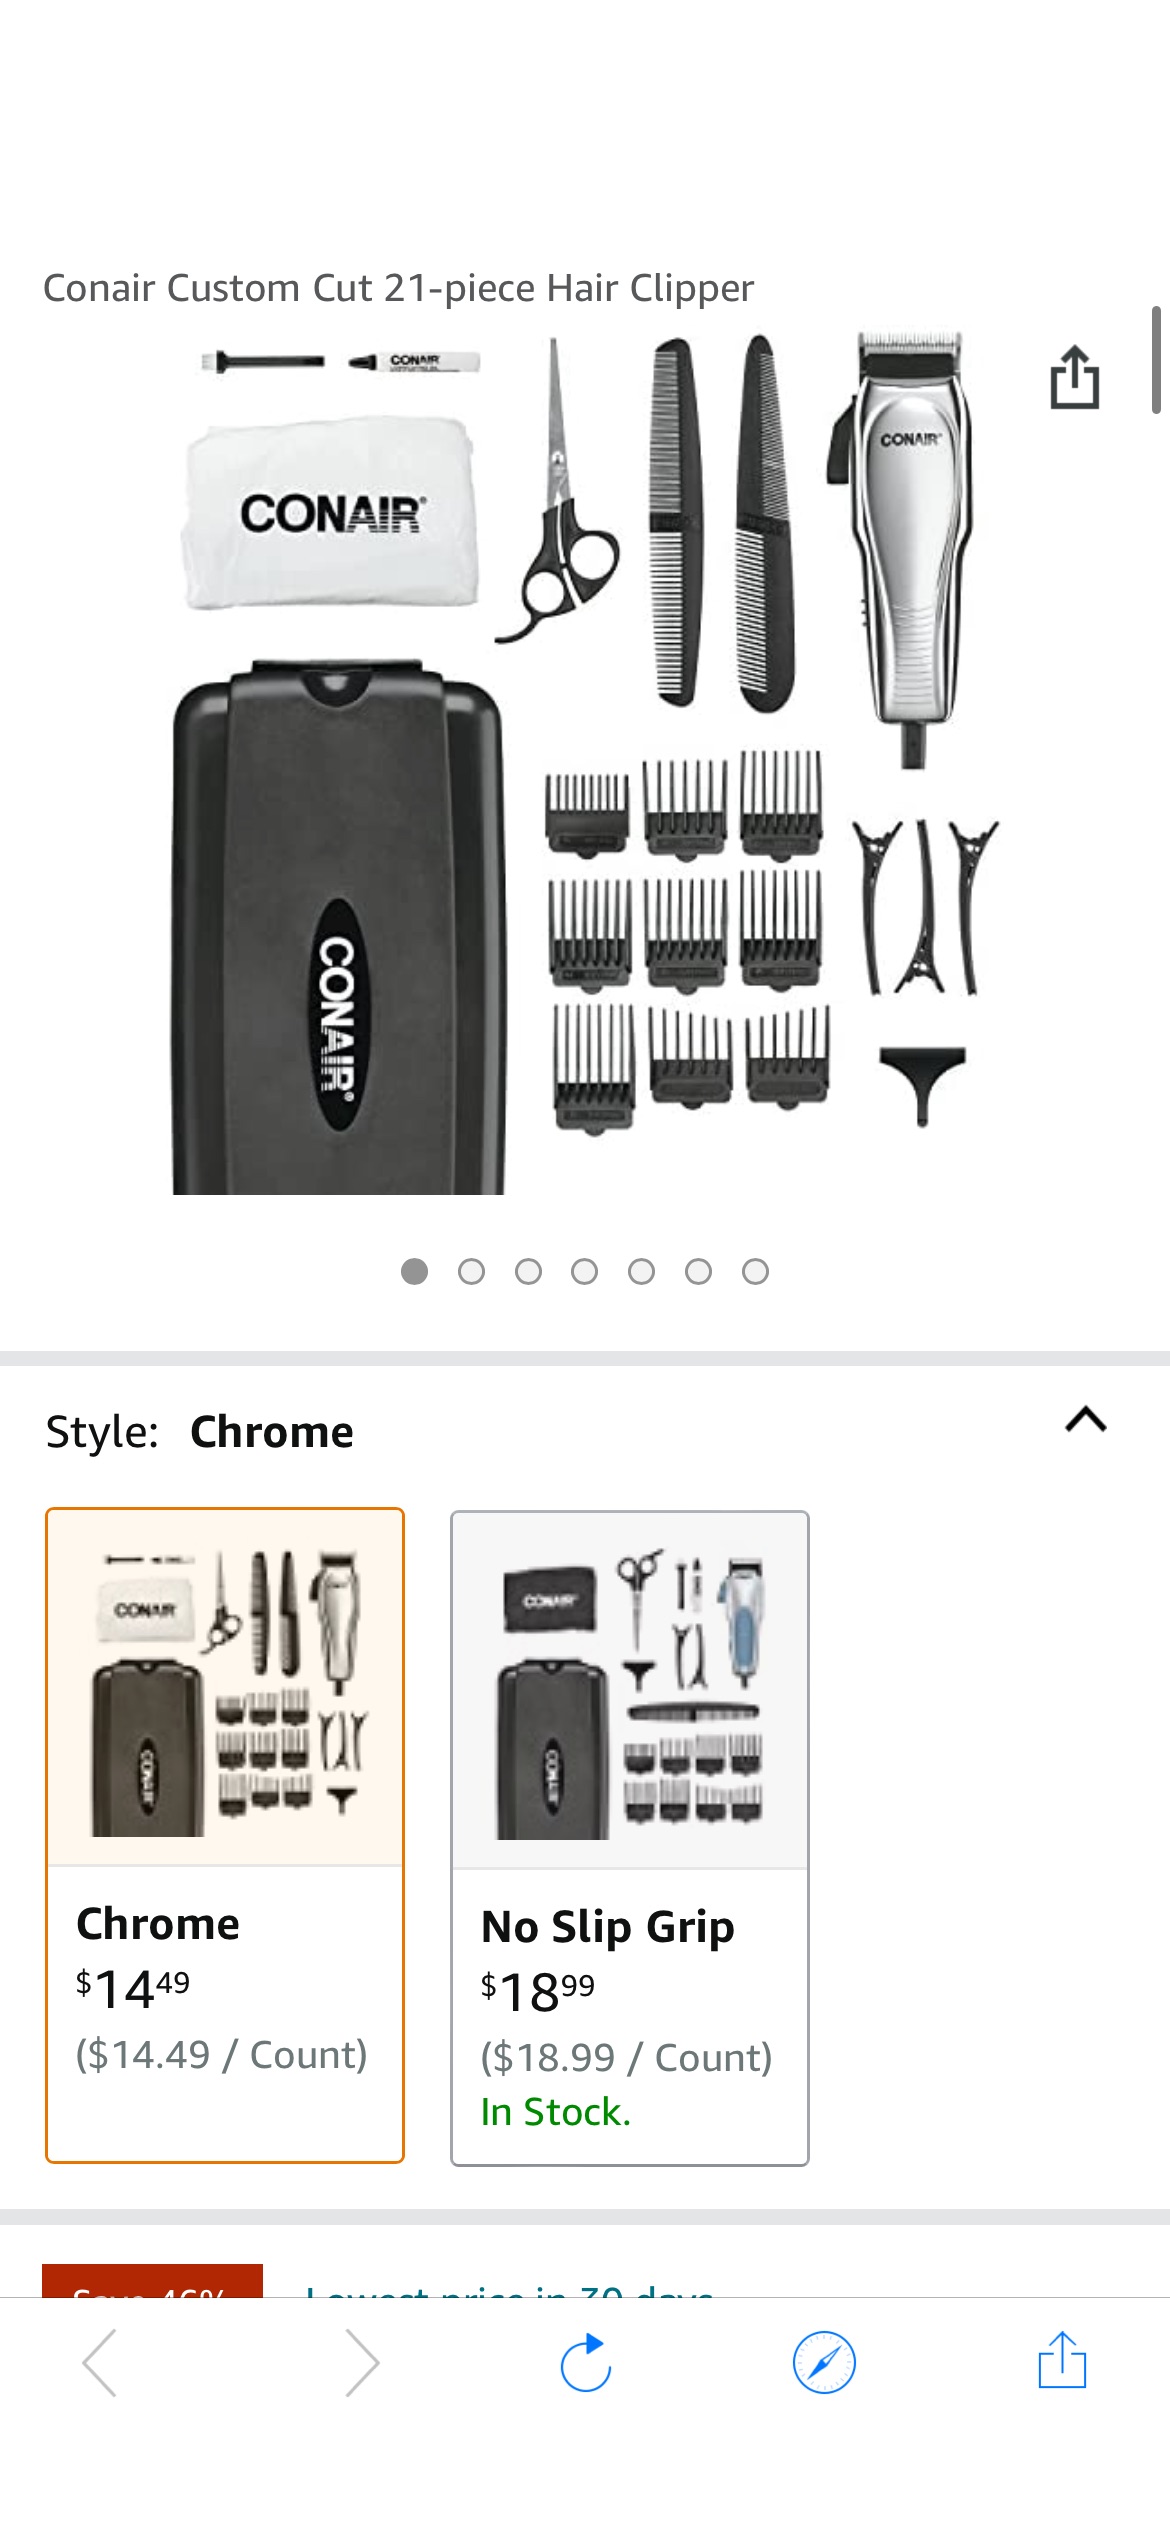 Amazon.com: Conair Custom Cut 21-piece Hair Clipper : Beauty & Personal Care 剪发套装